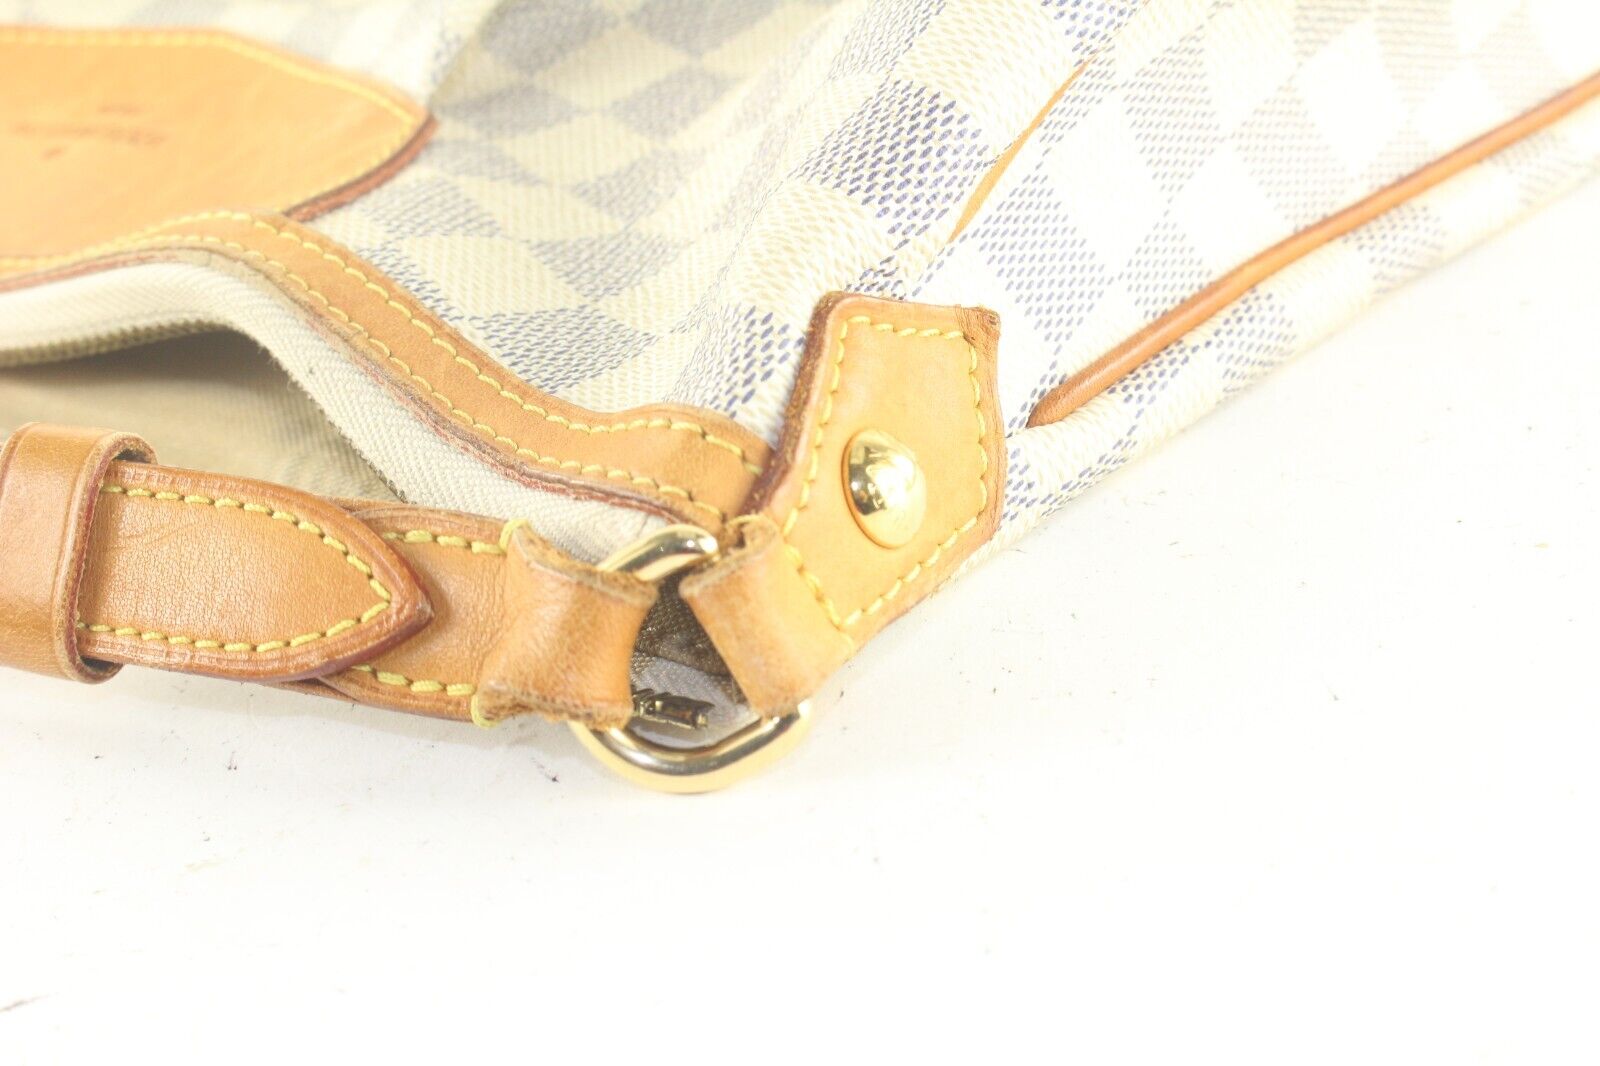 Louis Vuitton Siracusa Shoulder Bag PM White Leather 8LV919k